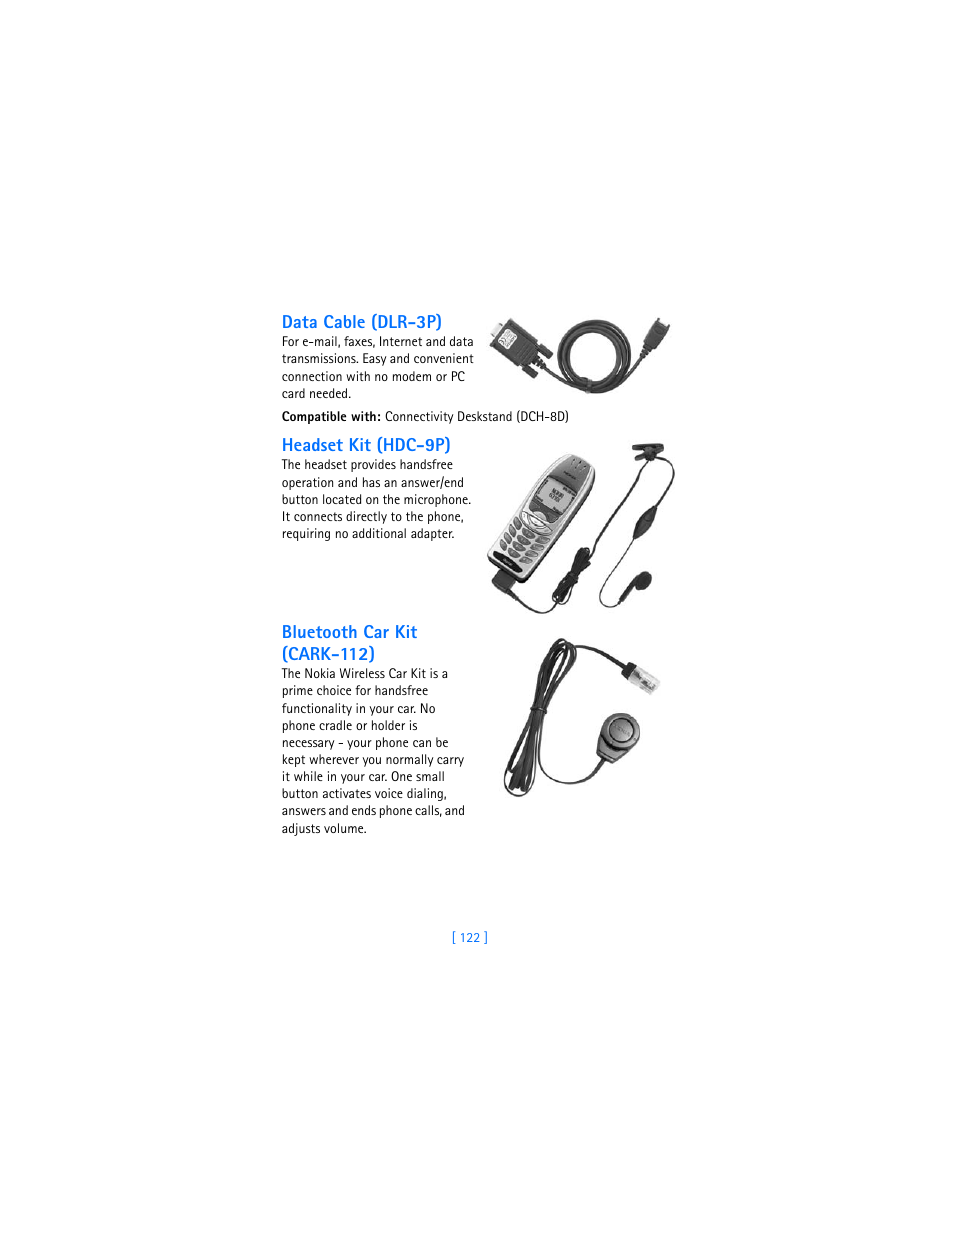 Data cable (dlr-3p), Headset kit (hdc-9p), Bluetooth car kit (cark-112) | Nokia  6310i User Manual | Page 131 / 161